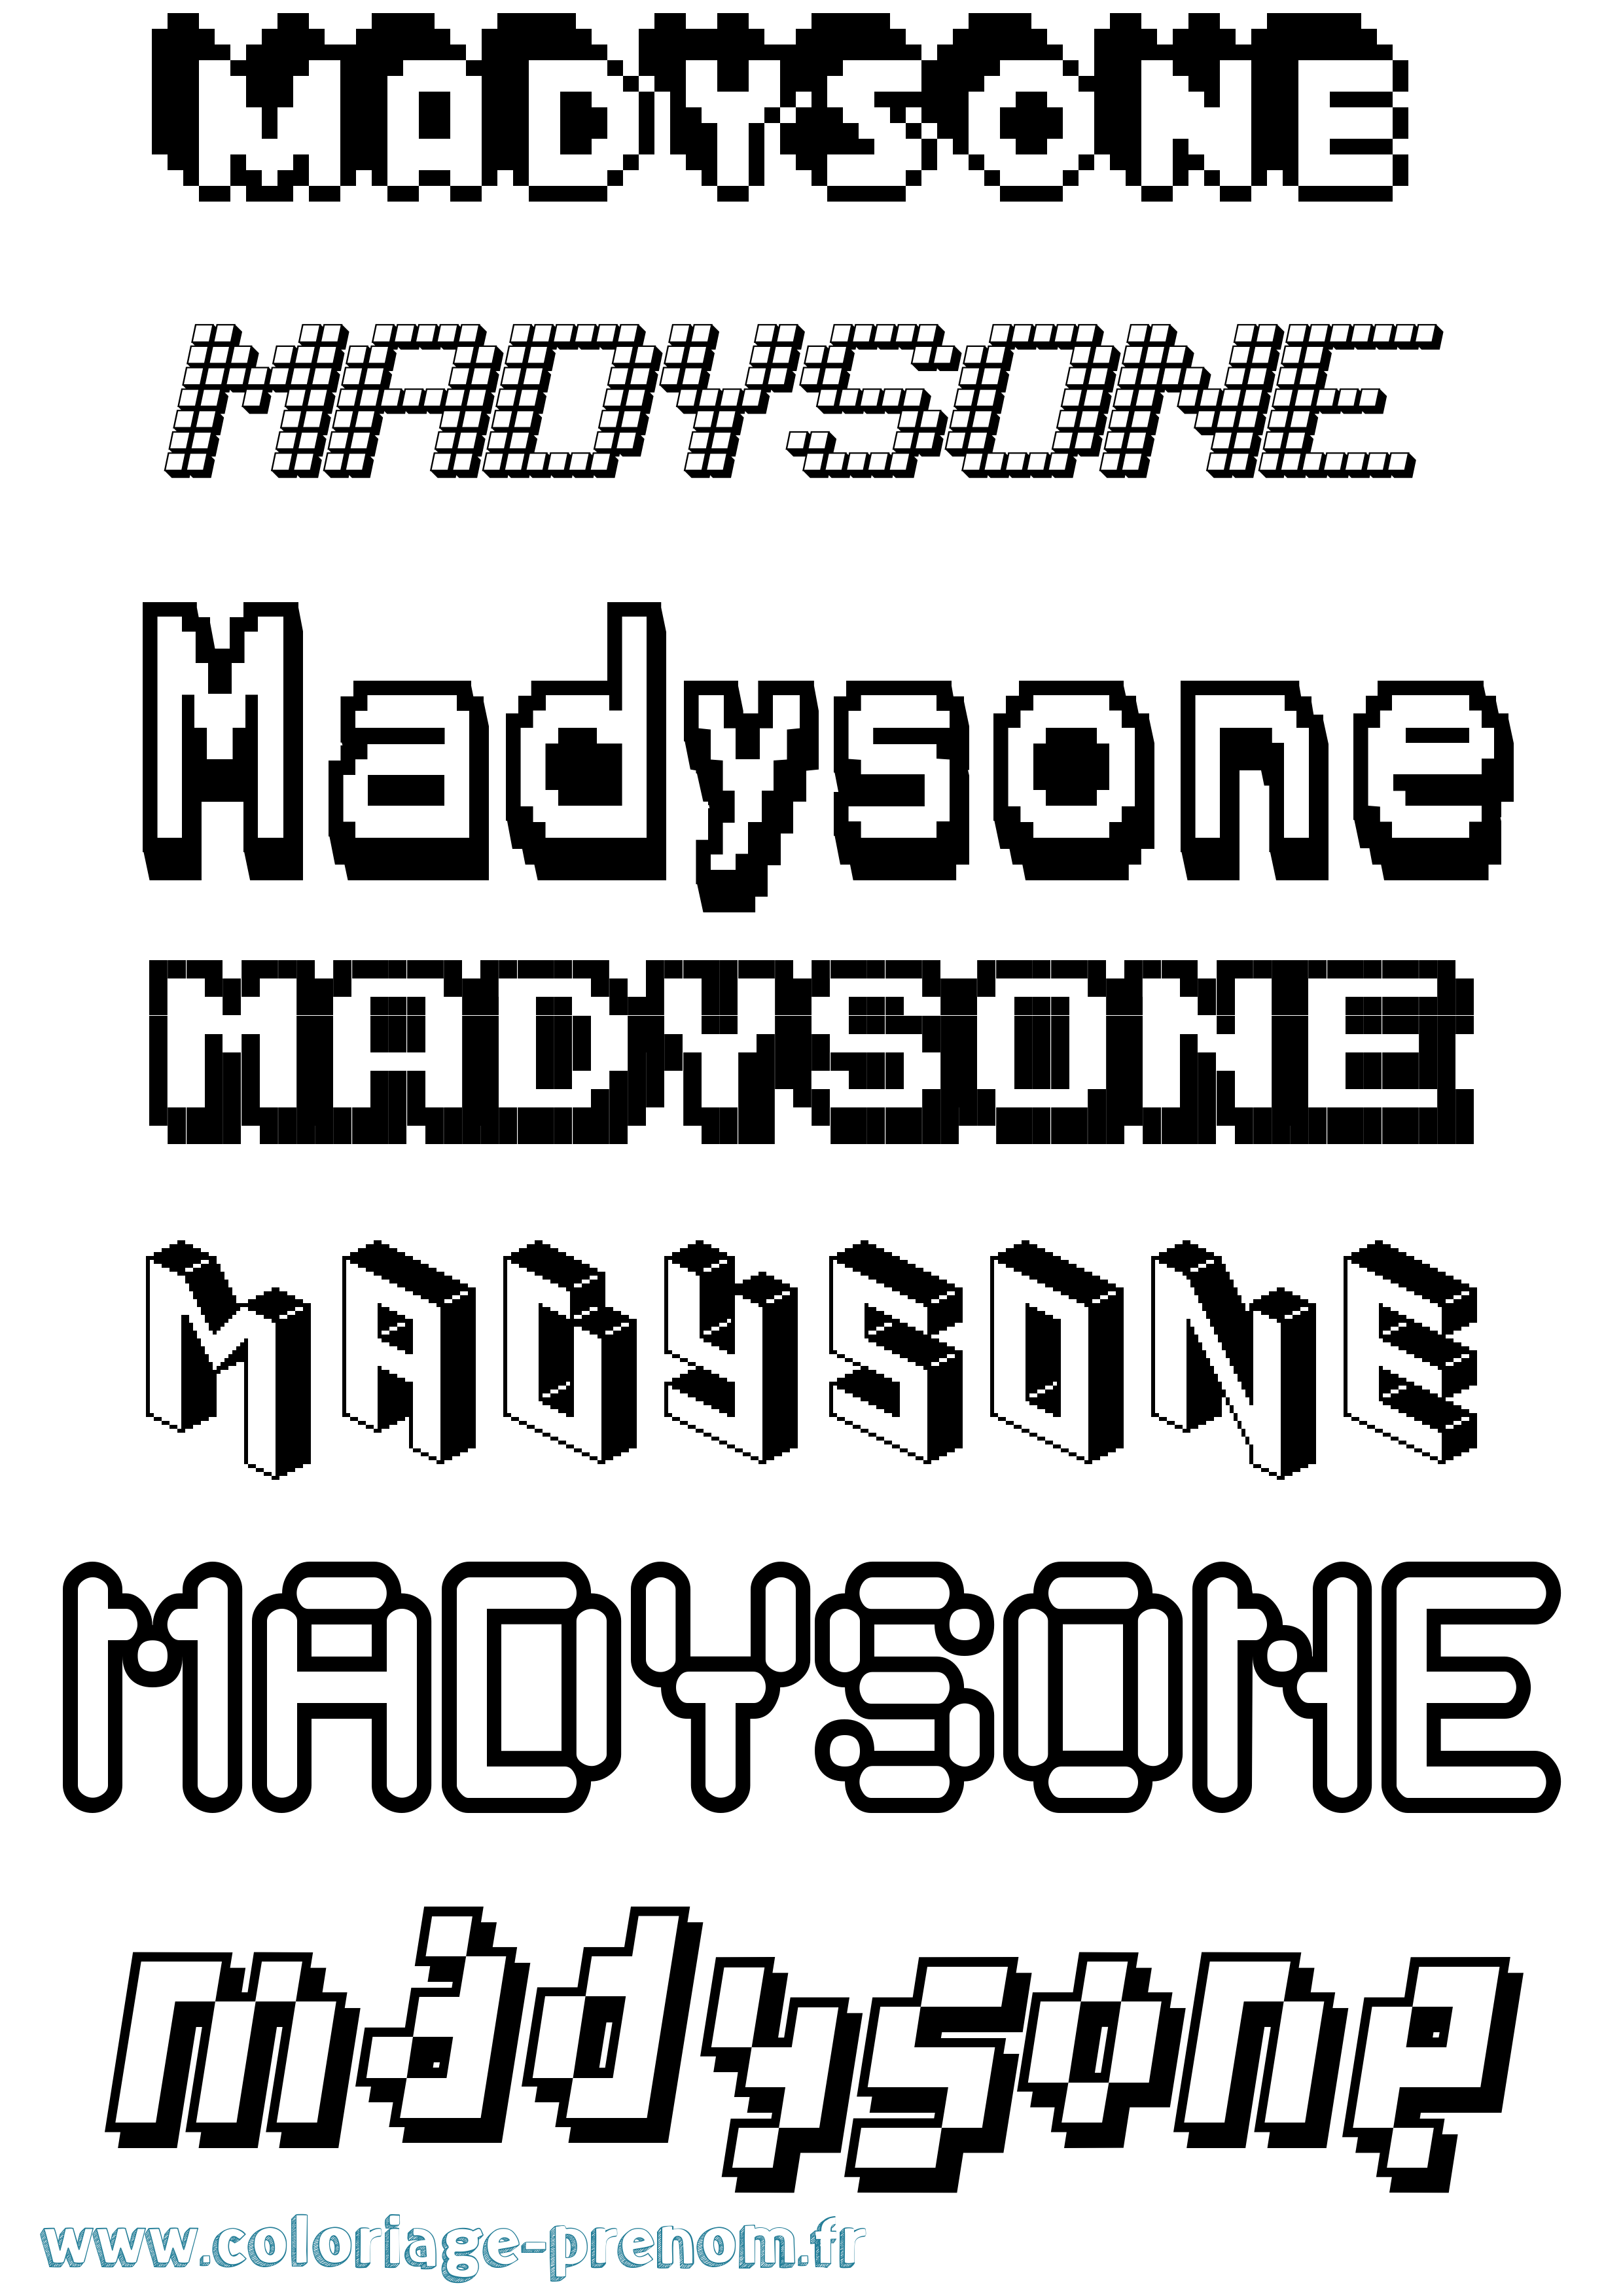 Coloriage prénom Madysone Pixel